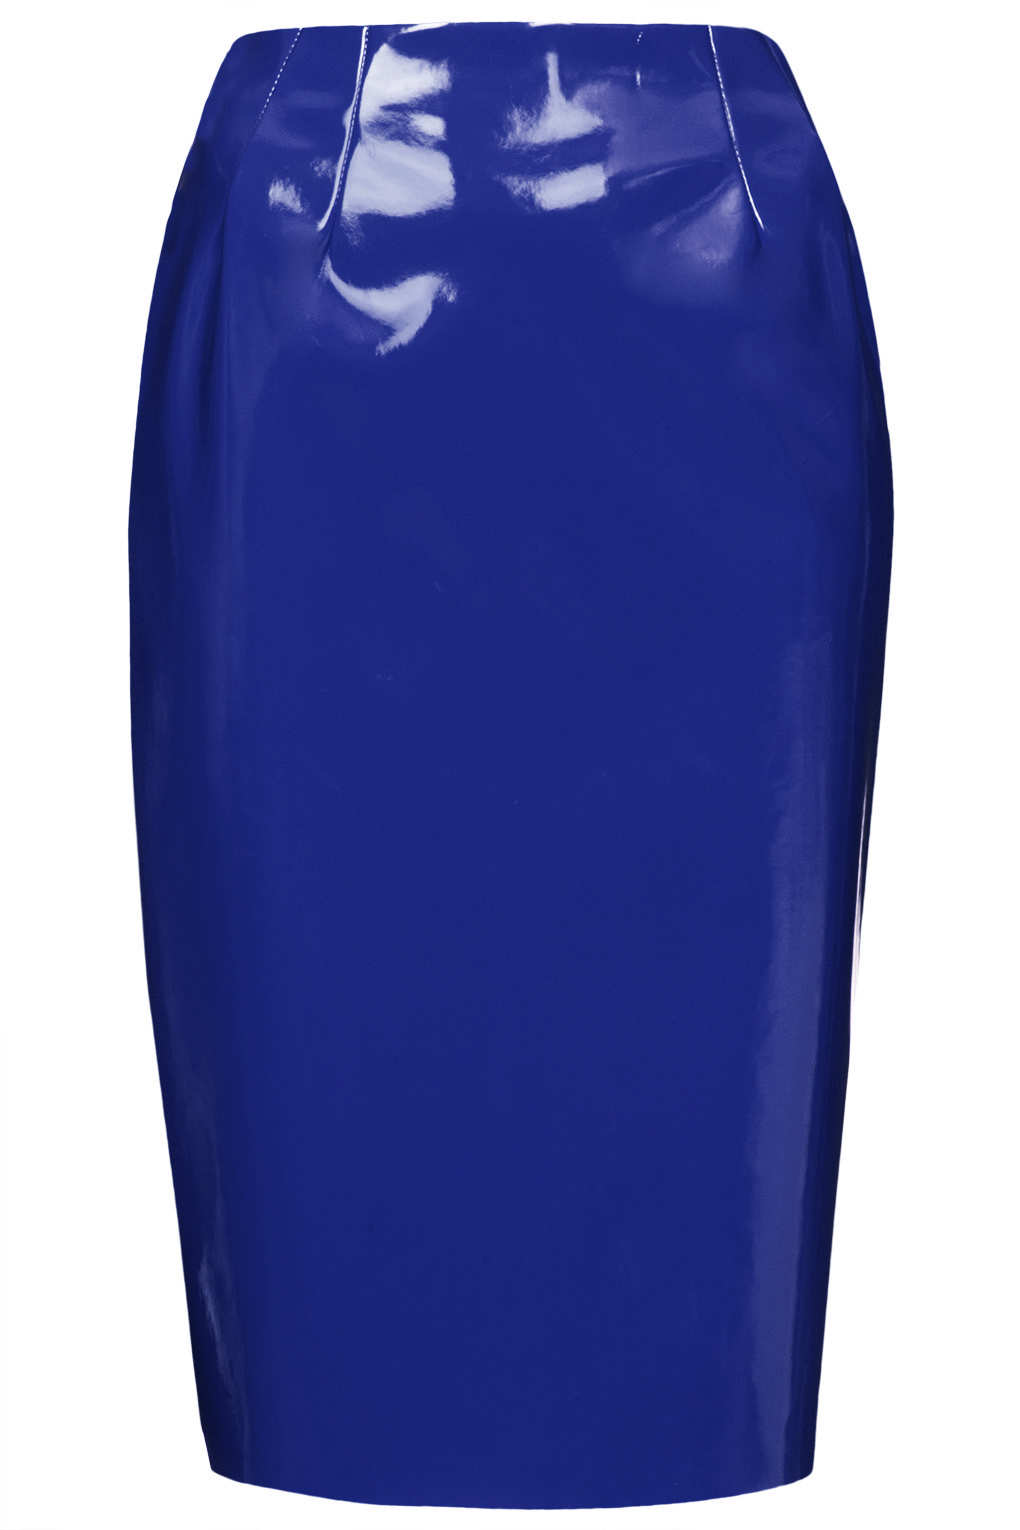 Lyst - Topshop Navy Blue Vinyl Pencil Skirt in Blue